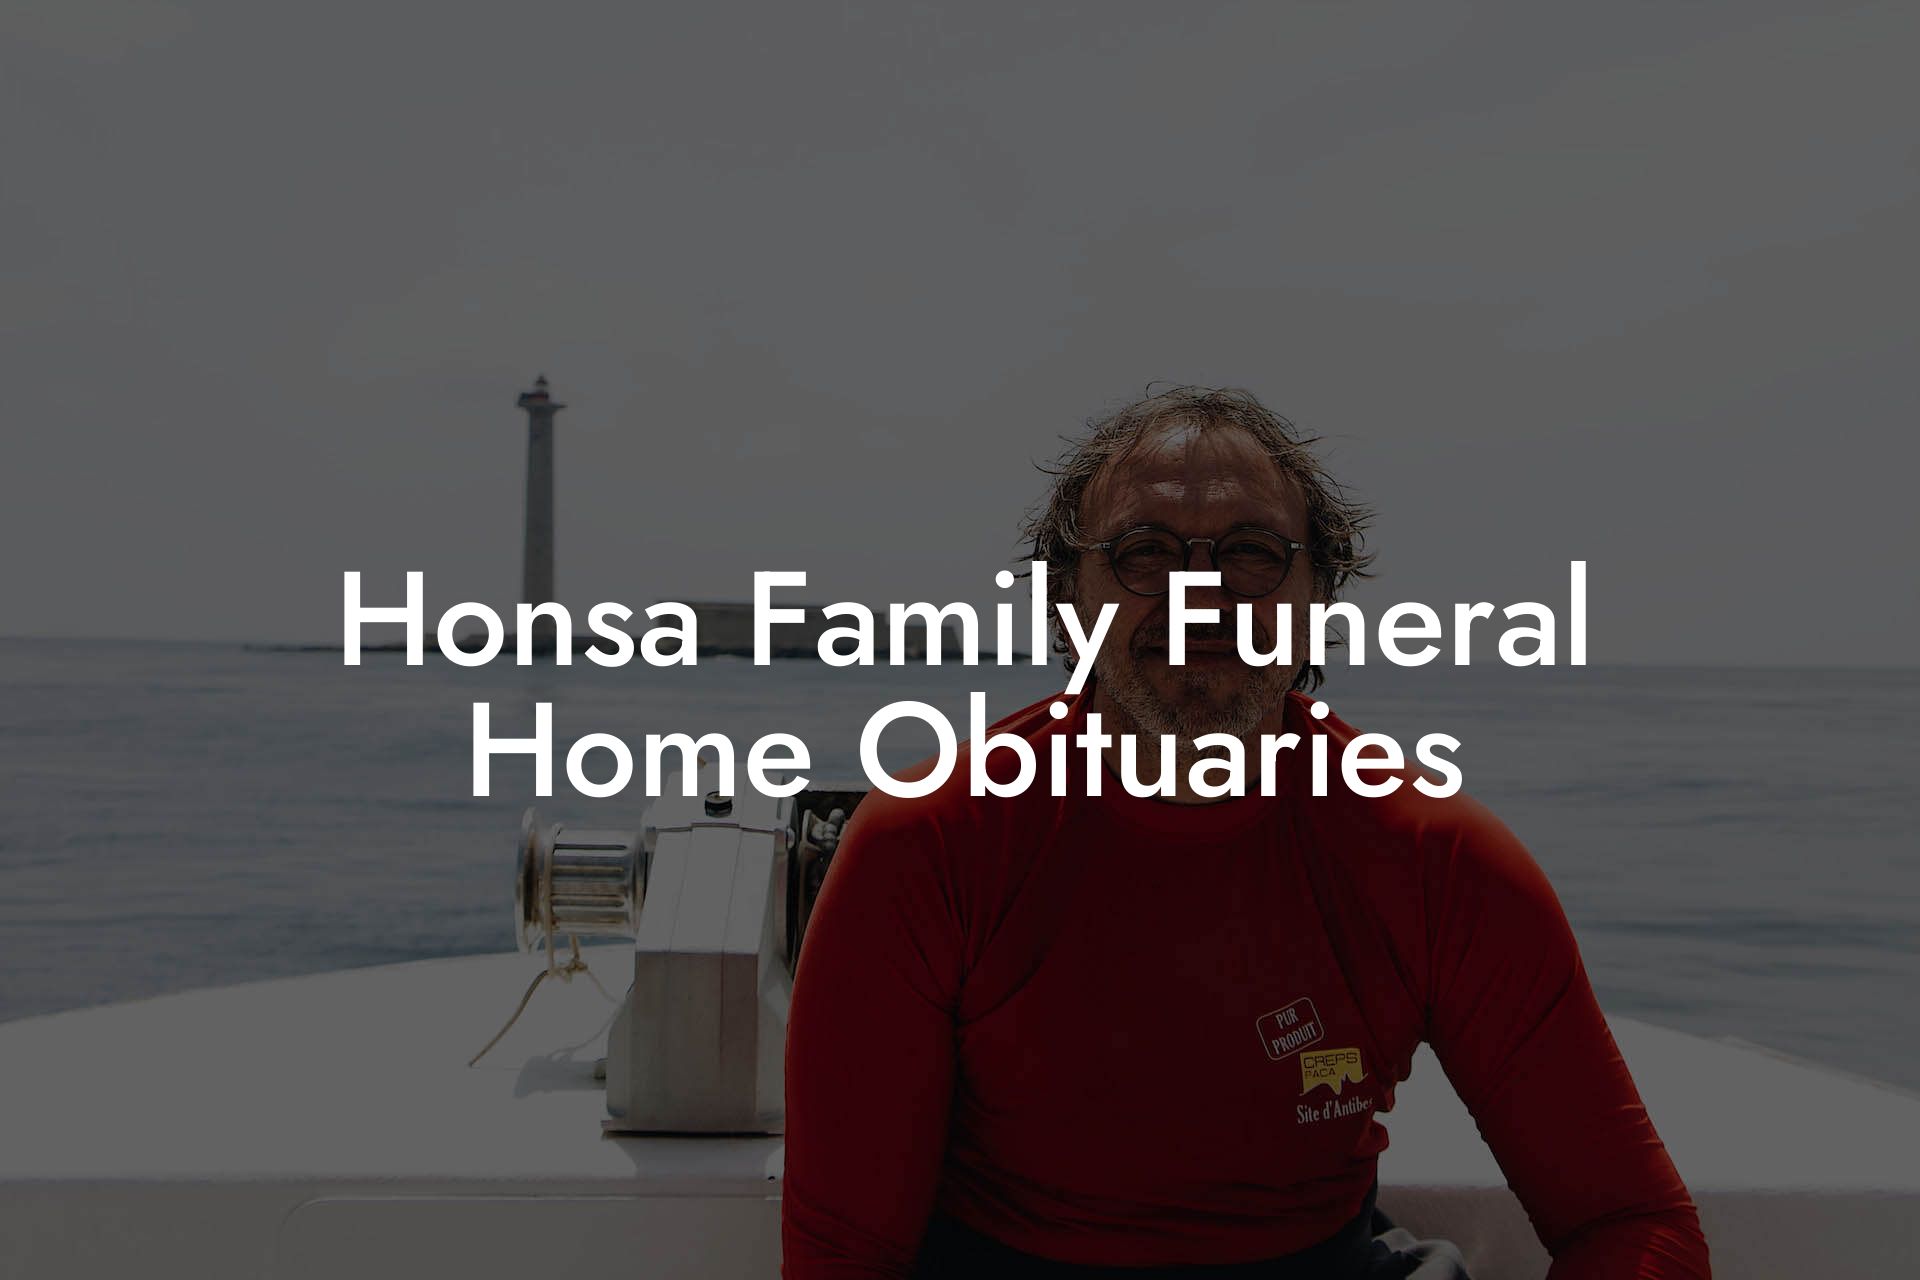 Honsa Family Funeral Home Obituaries